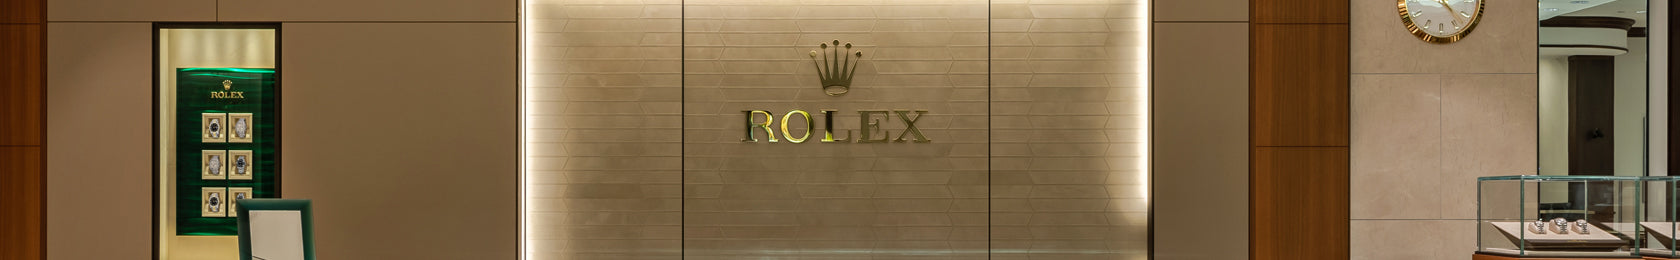 Rolex Showroom Banner at Fink's Jewelers Huntersville, NC